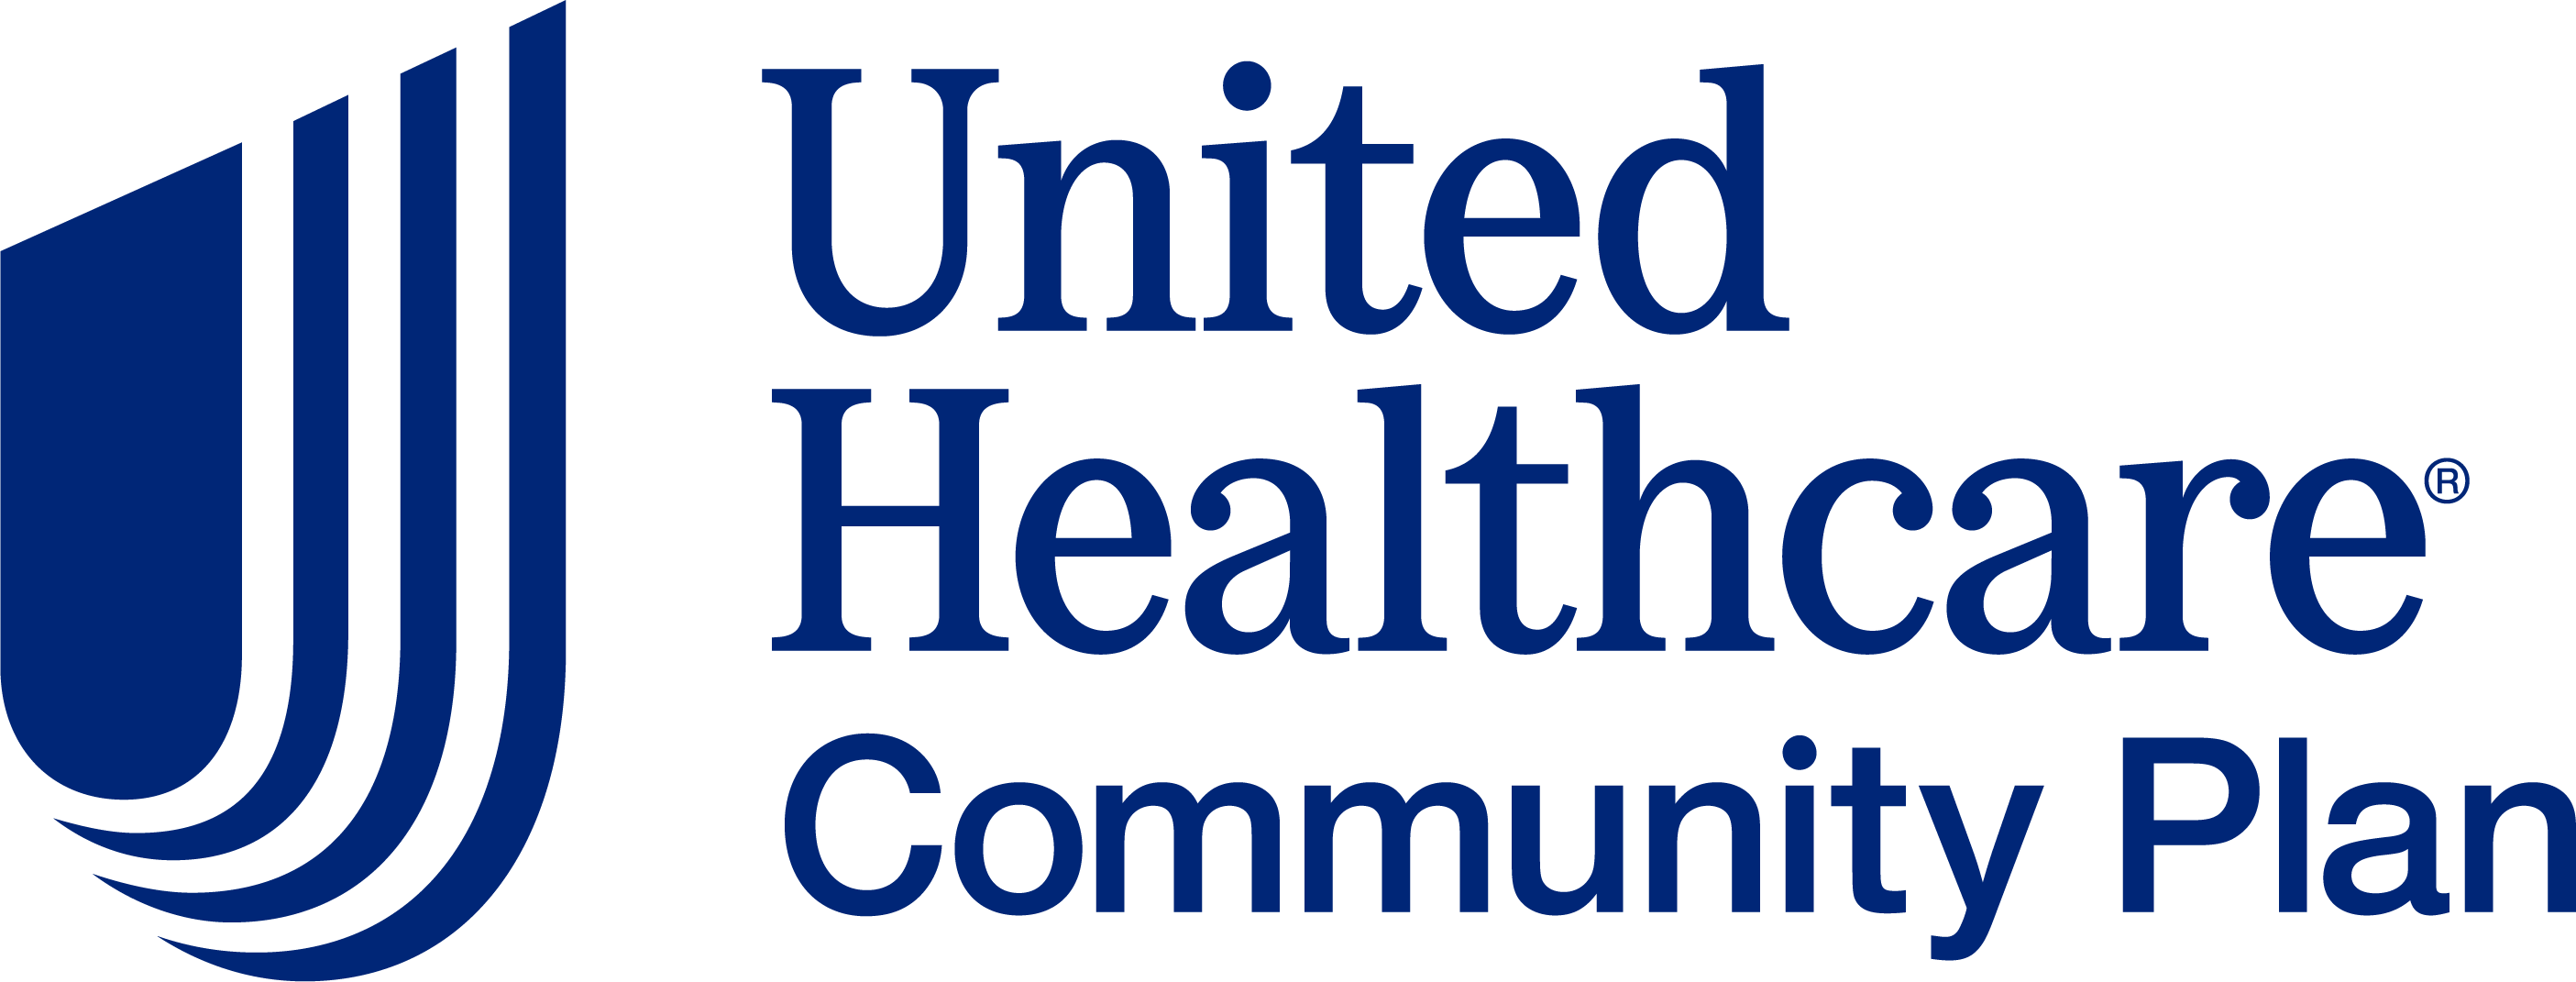 Sponsored by United Health Community Plan